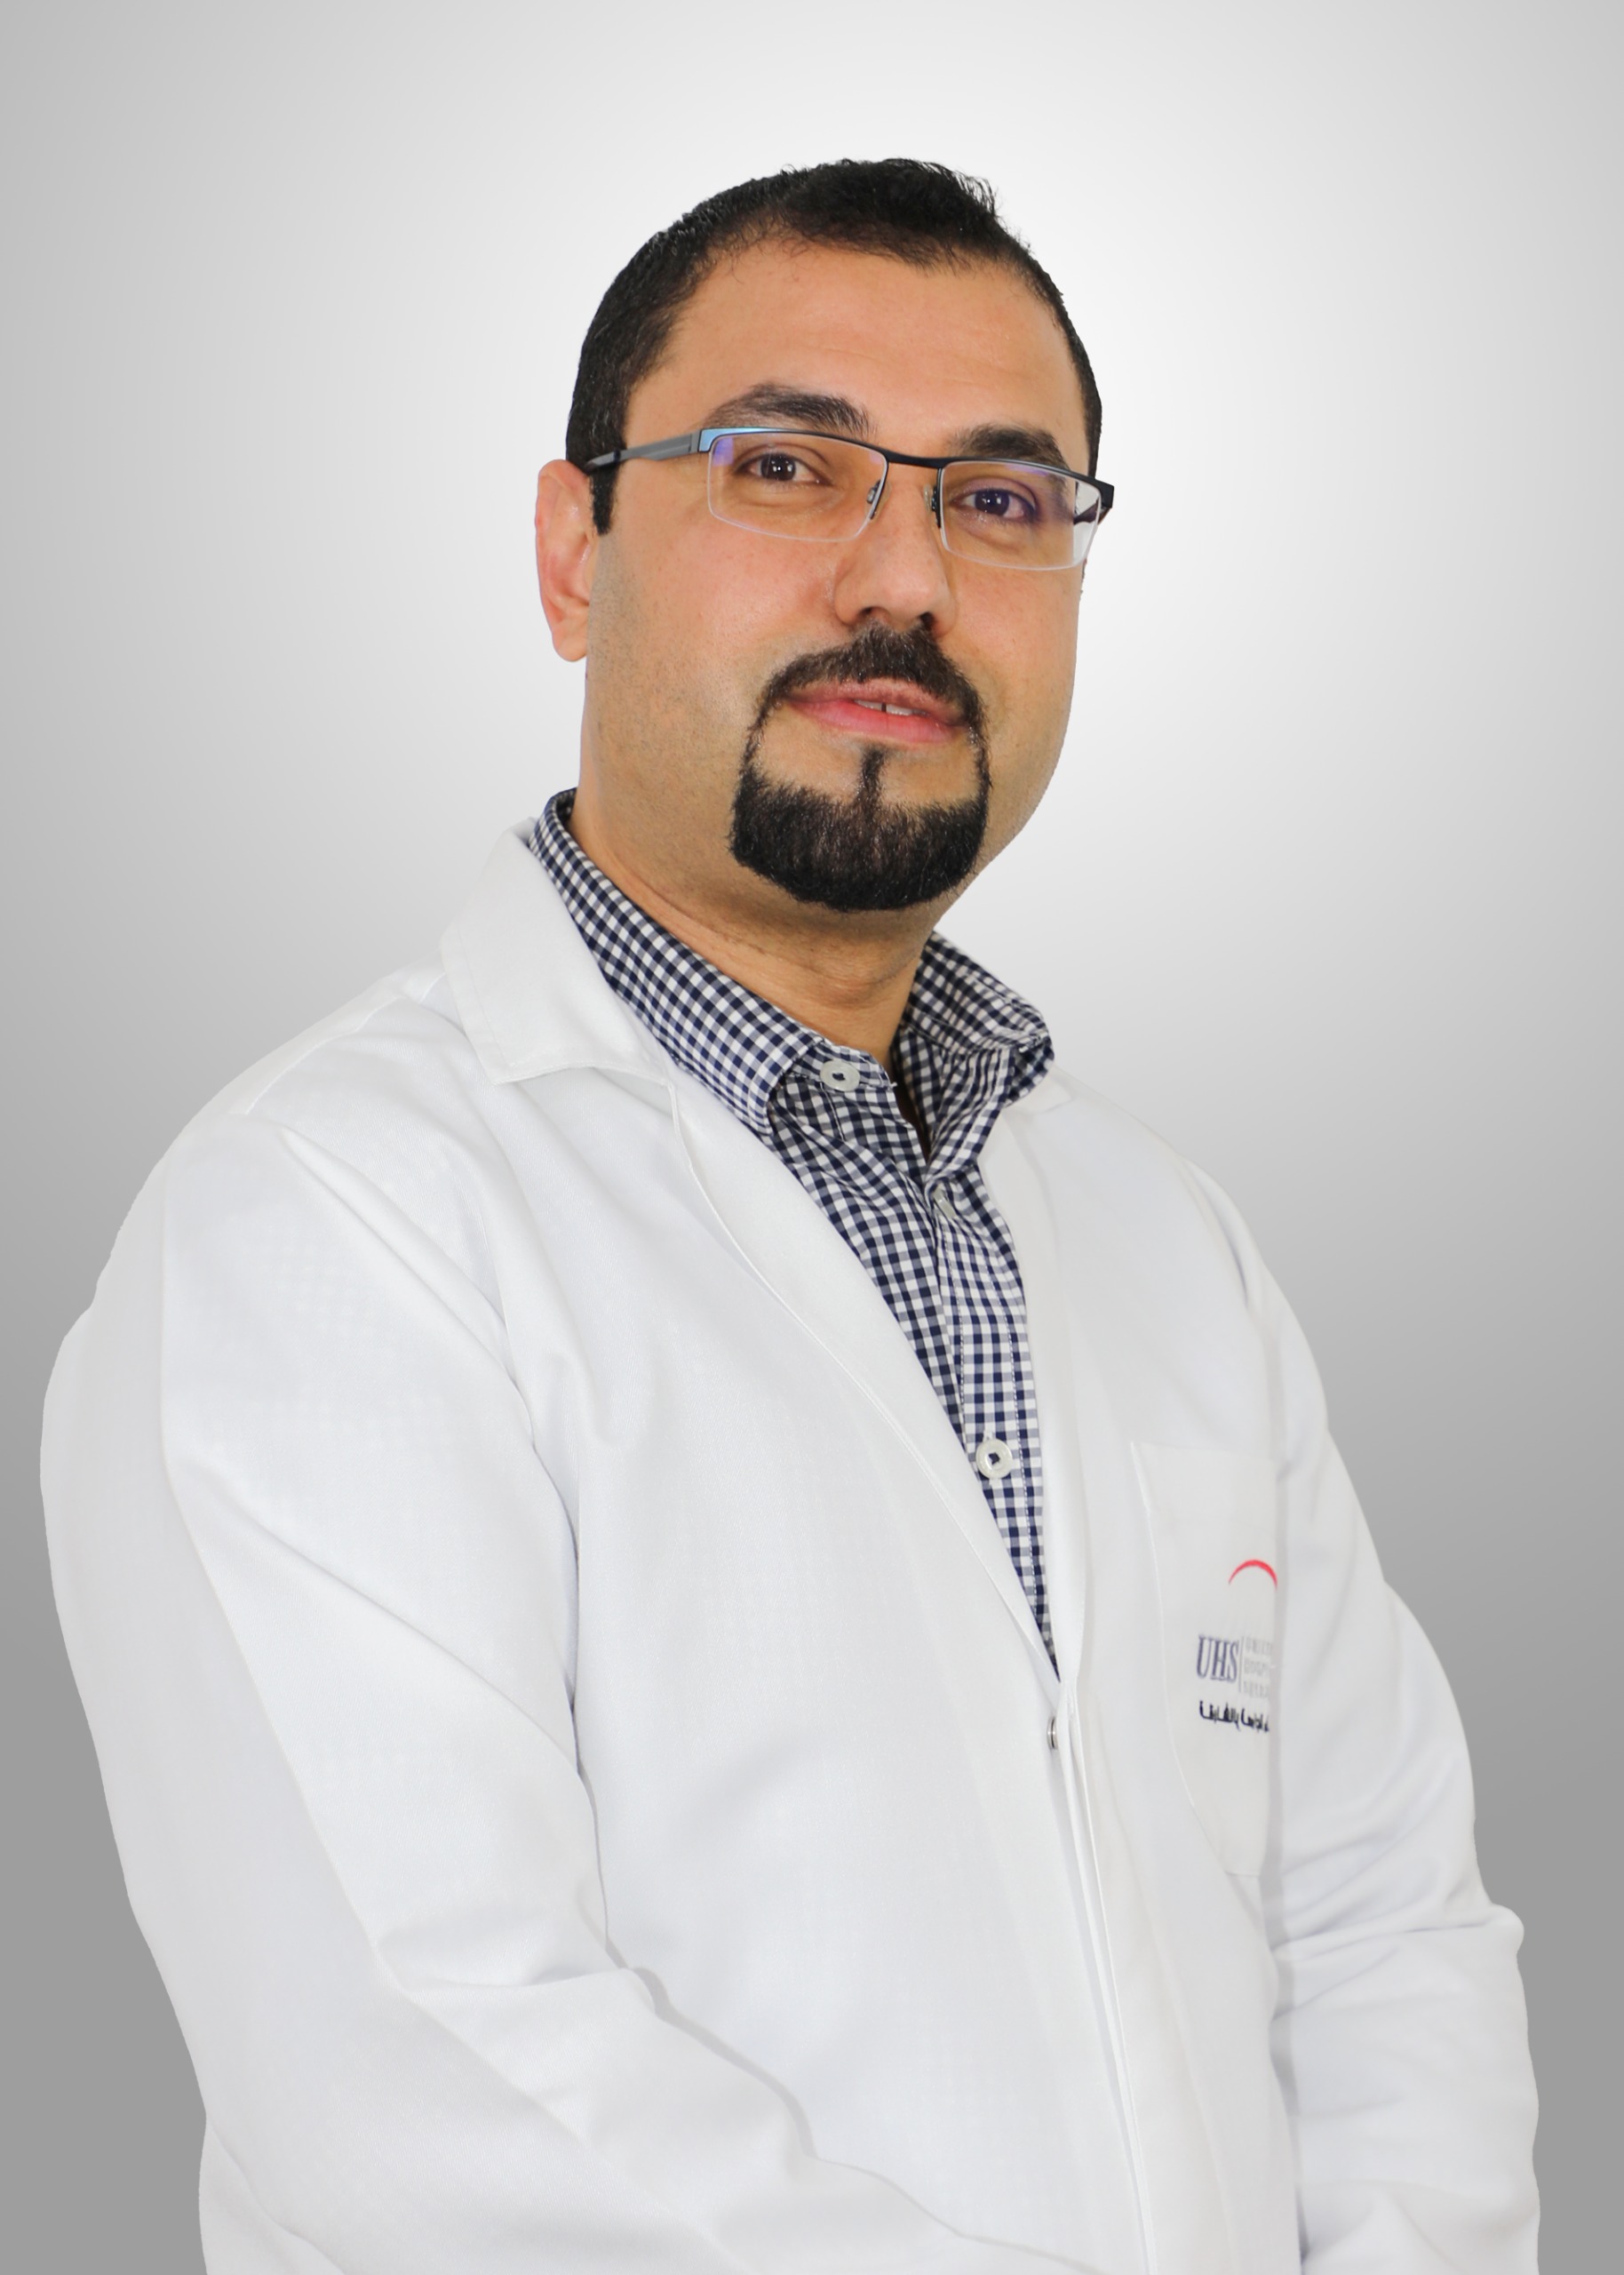 Dr. Samih Khlaif , Consultant Neurologist